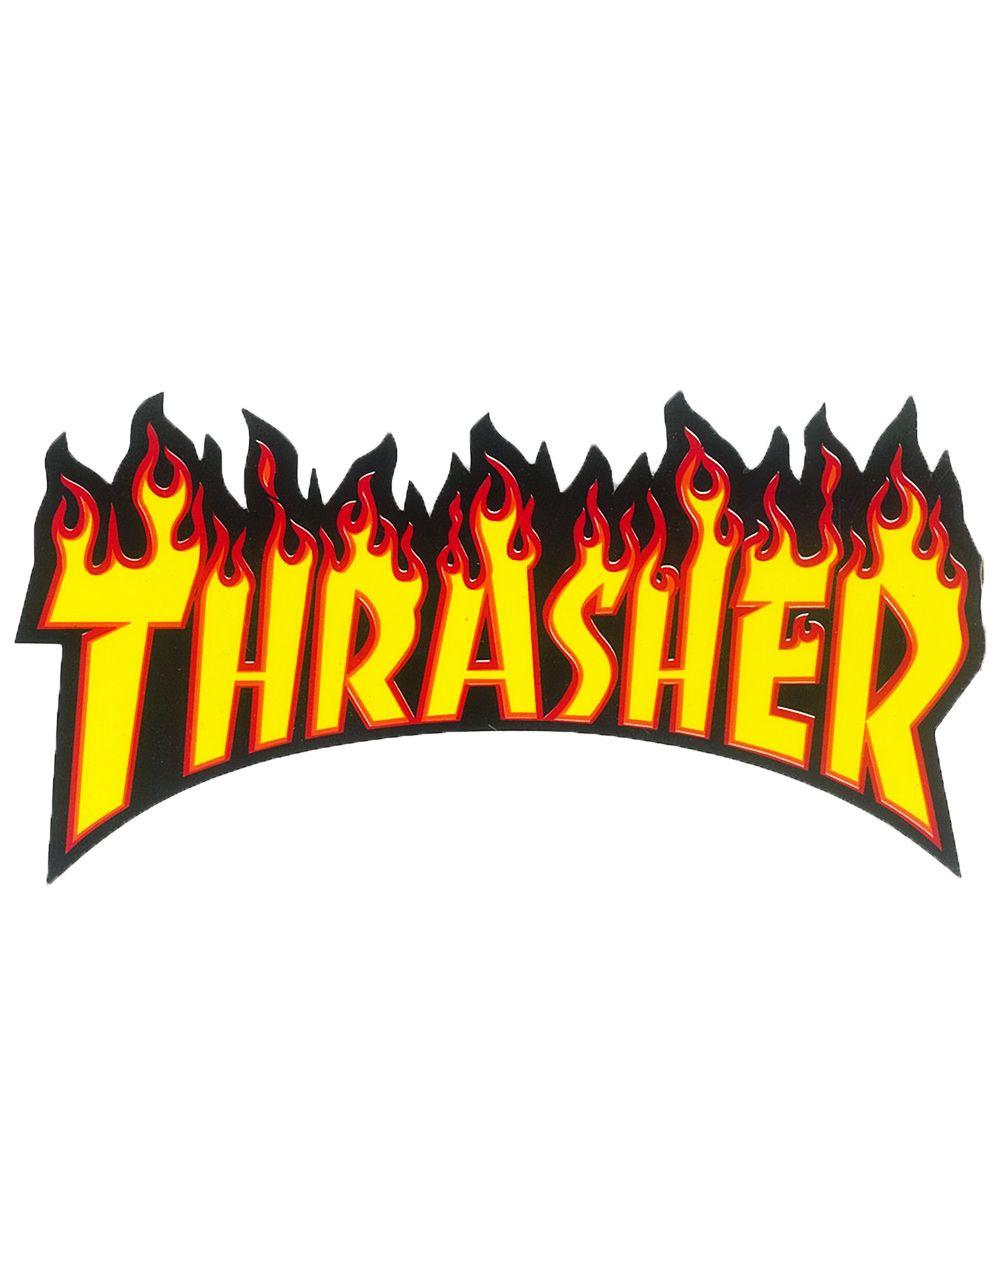 2017. Thrasher, Logos